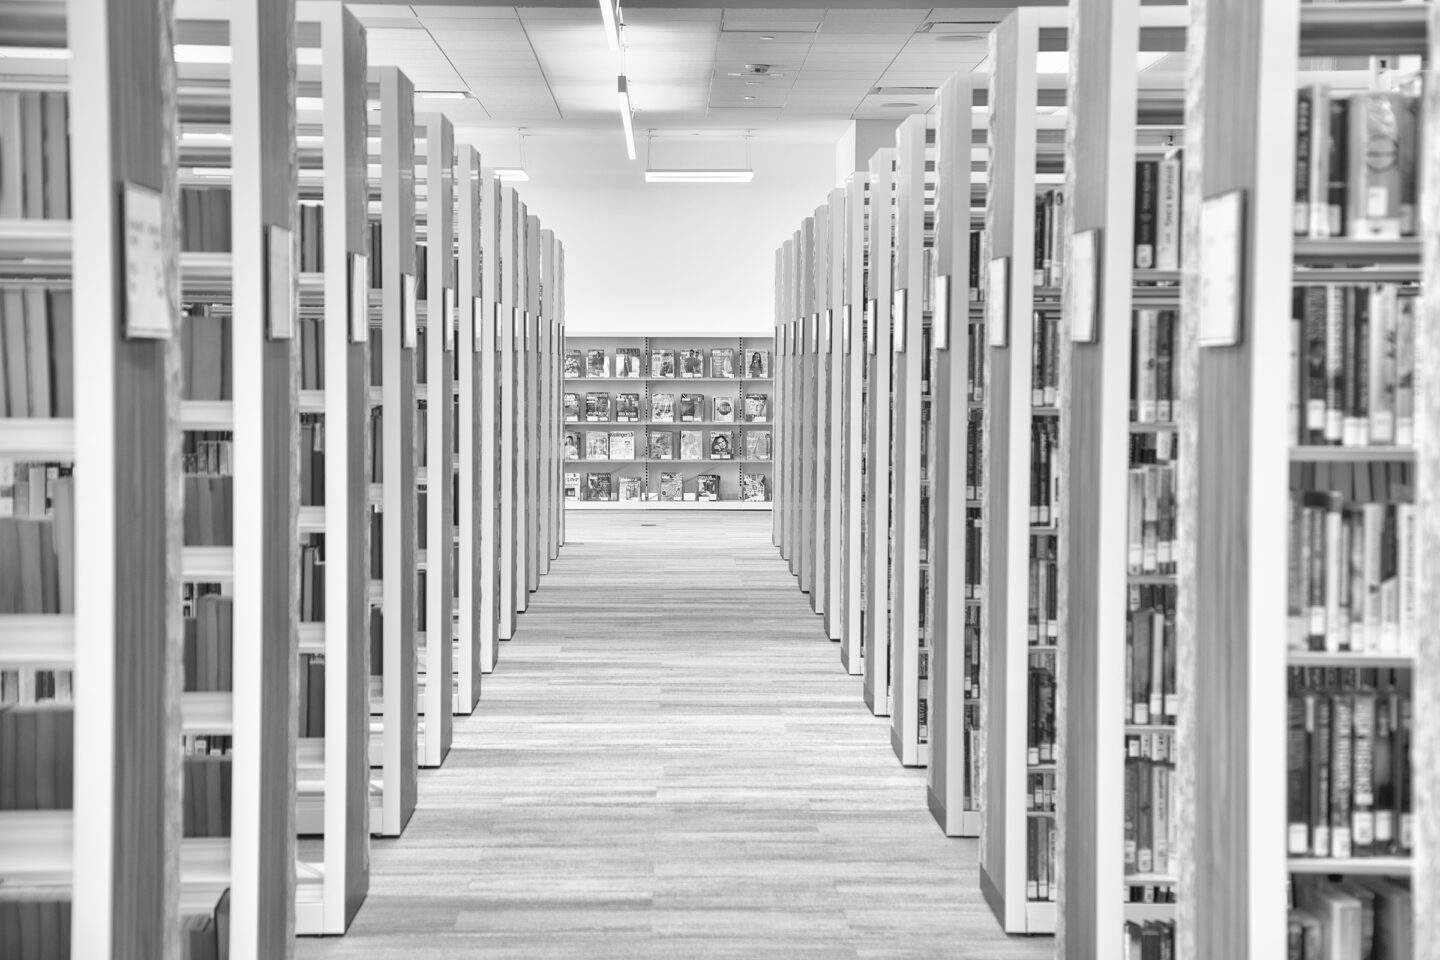 Library stacks in the Round Rock Public Library by Carol Schiraldi 